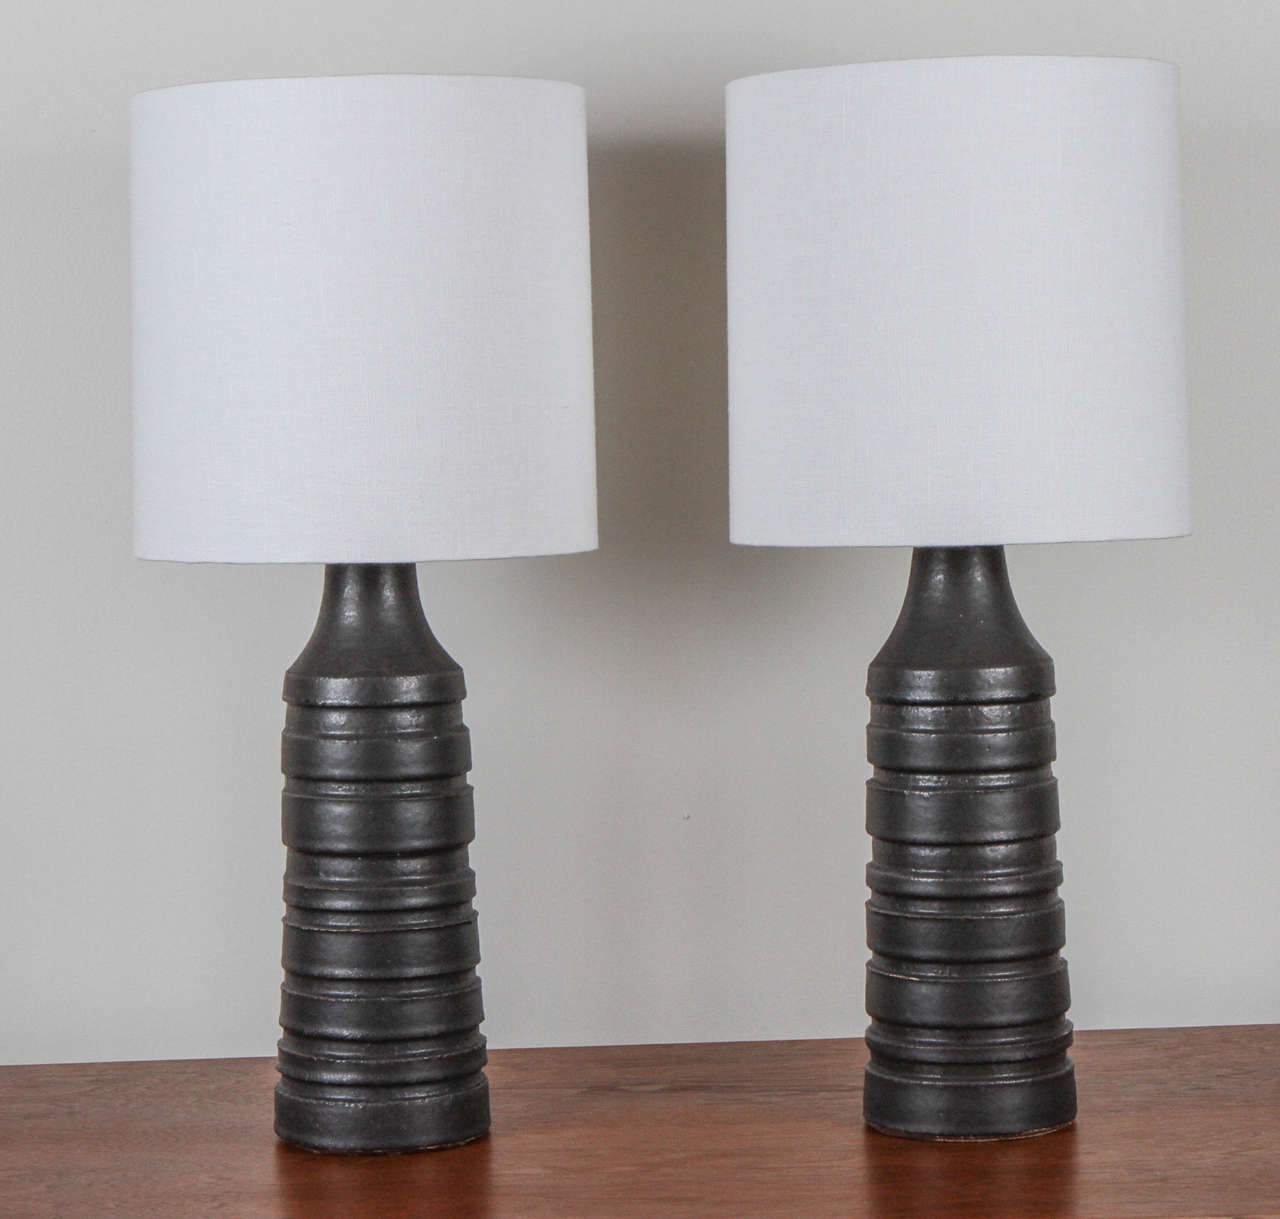 Pair of ceramic lamps by Los Angeles based ceramicist Victoria Morris.